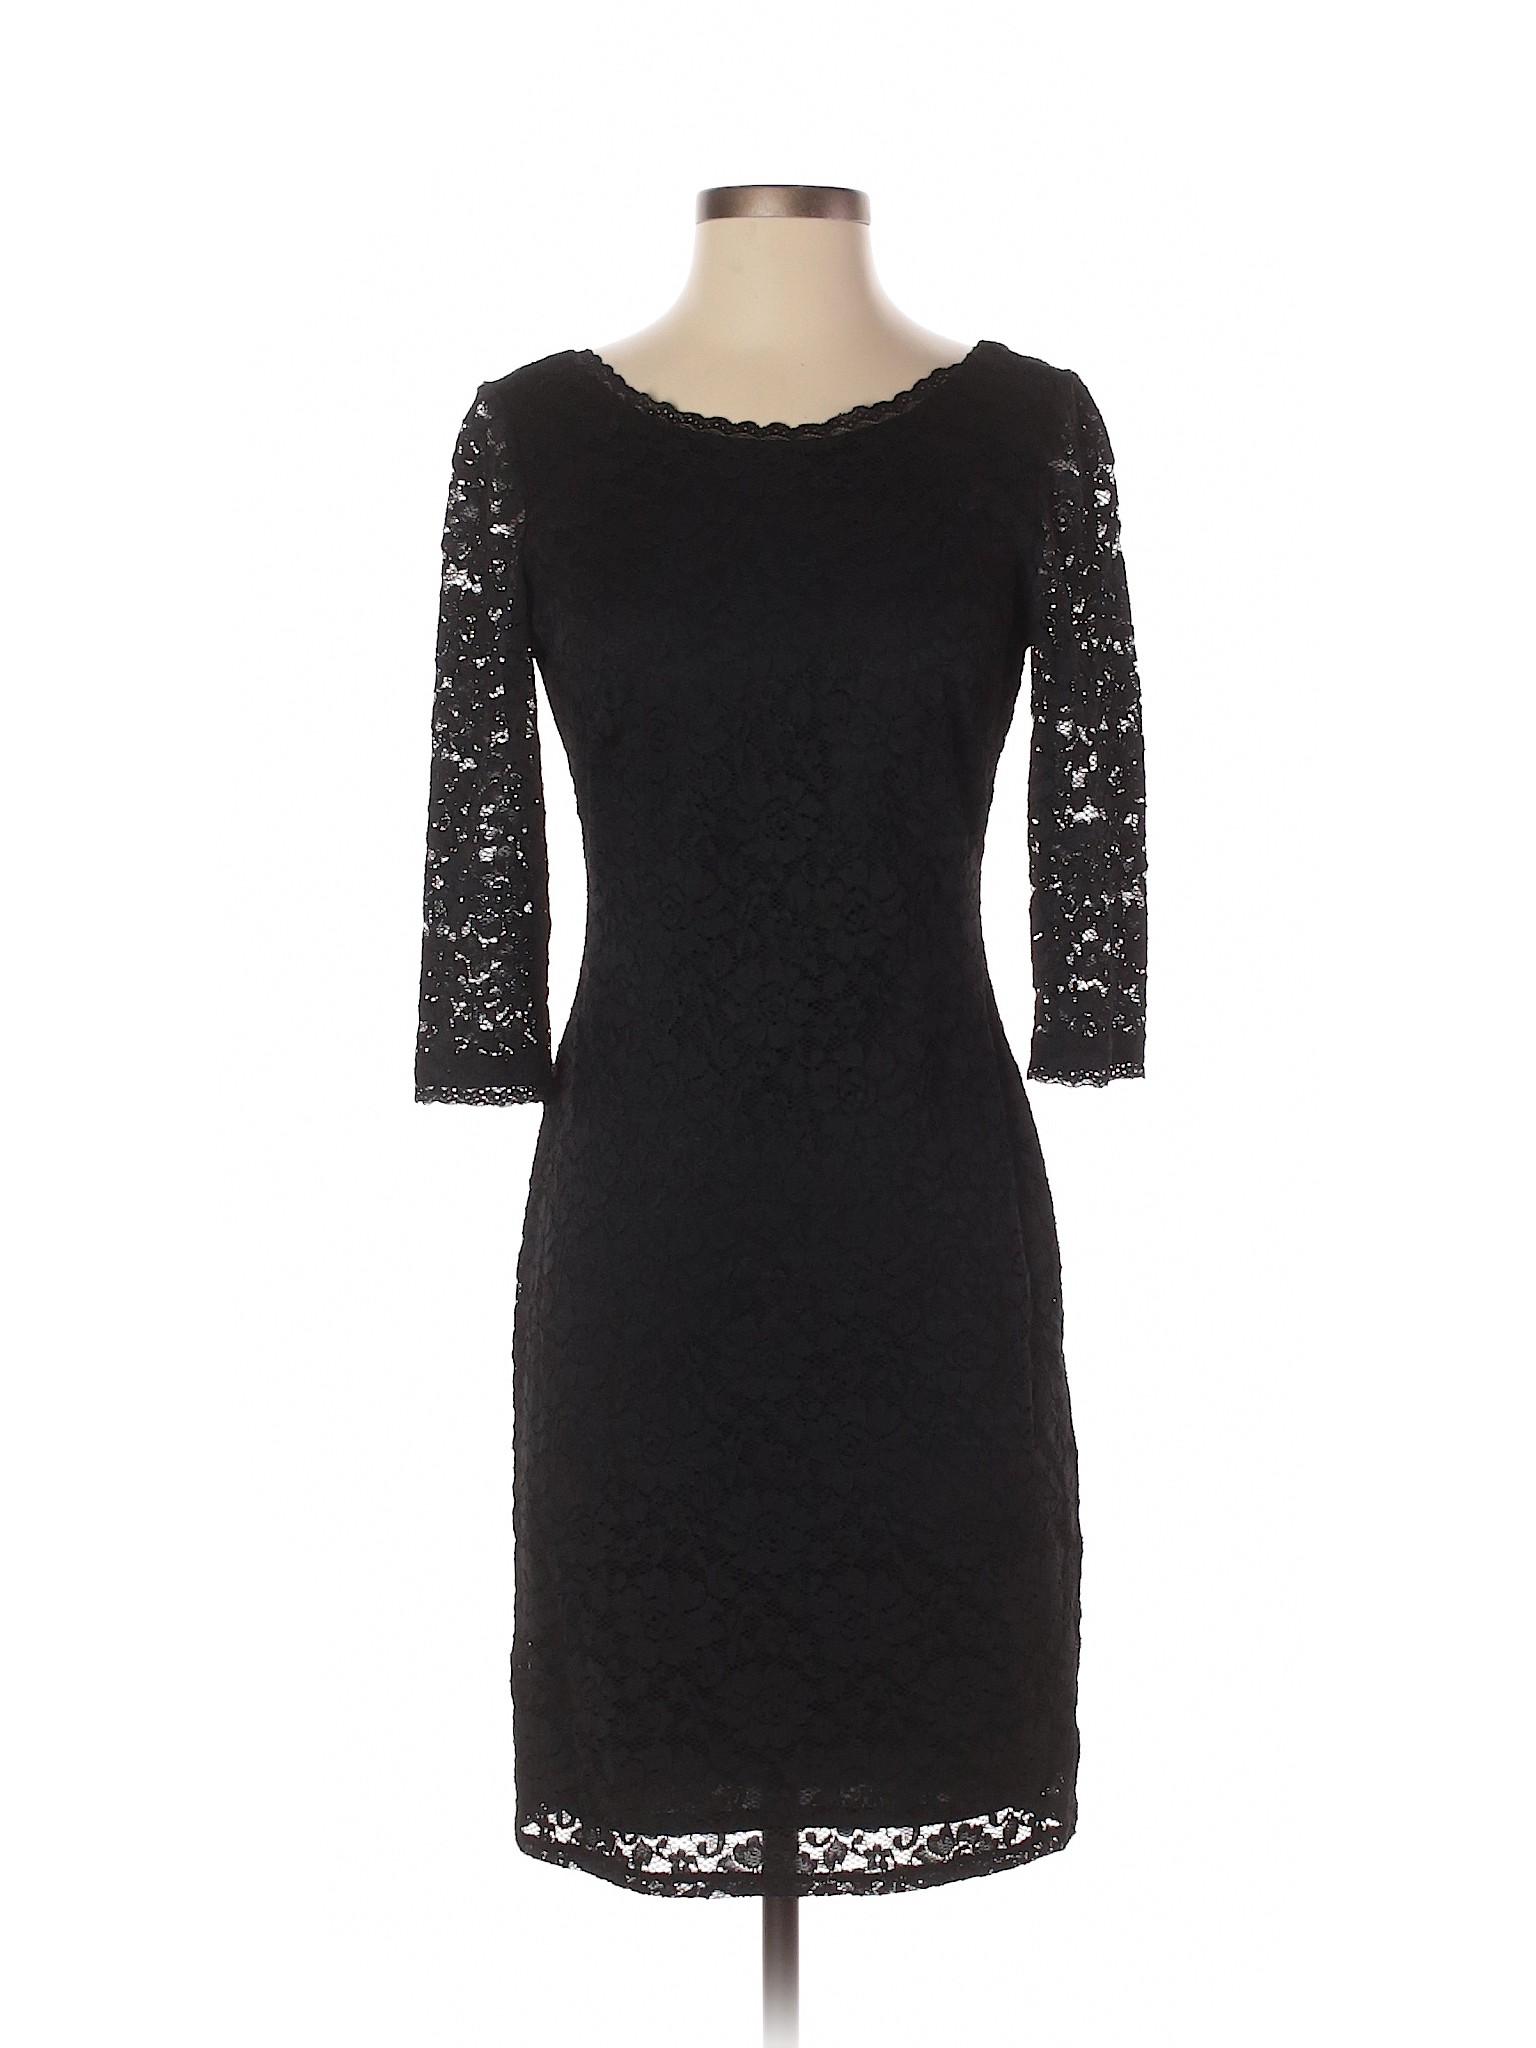 Eliza J Women Black Cocktail Dress 2 | eBay